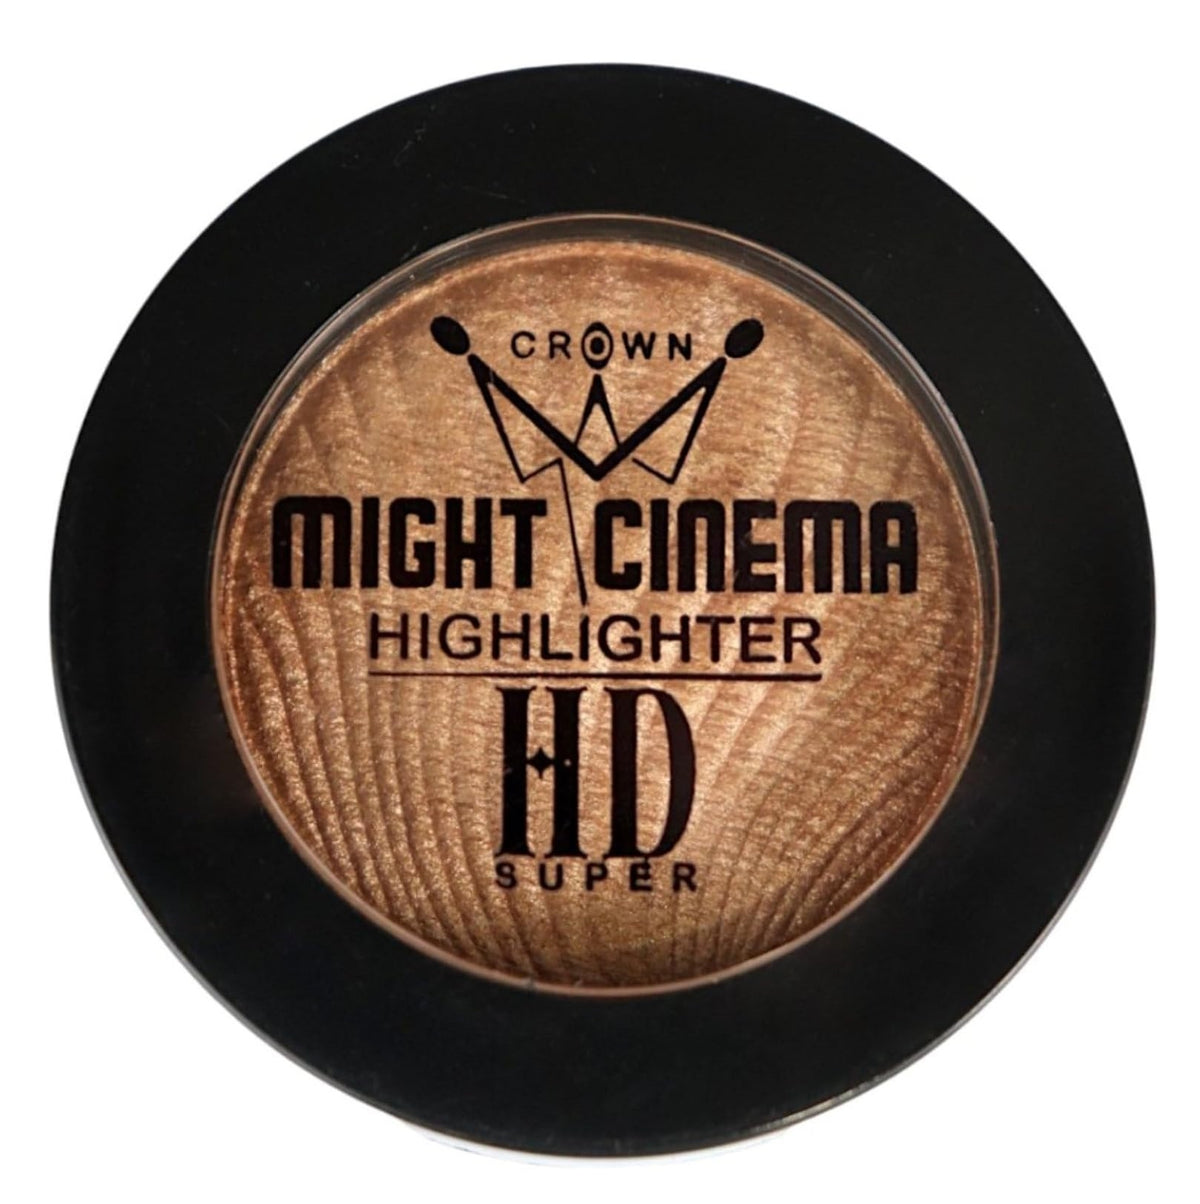 Might Cinema Highlighter HD Model : 1223 Color No : 101